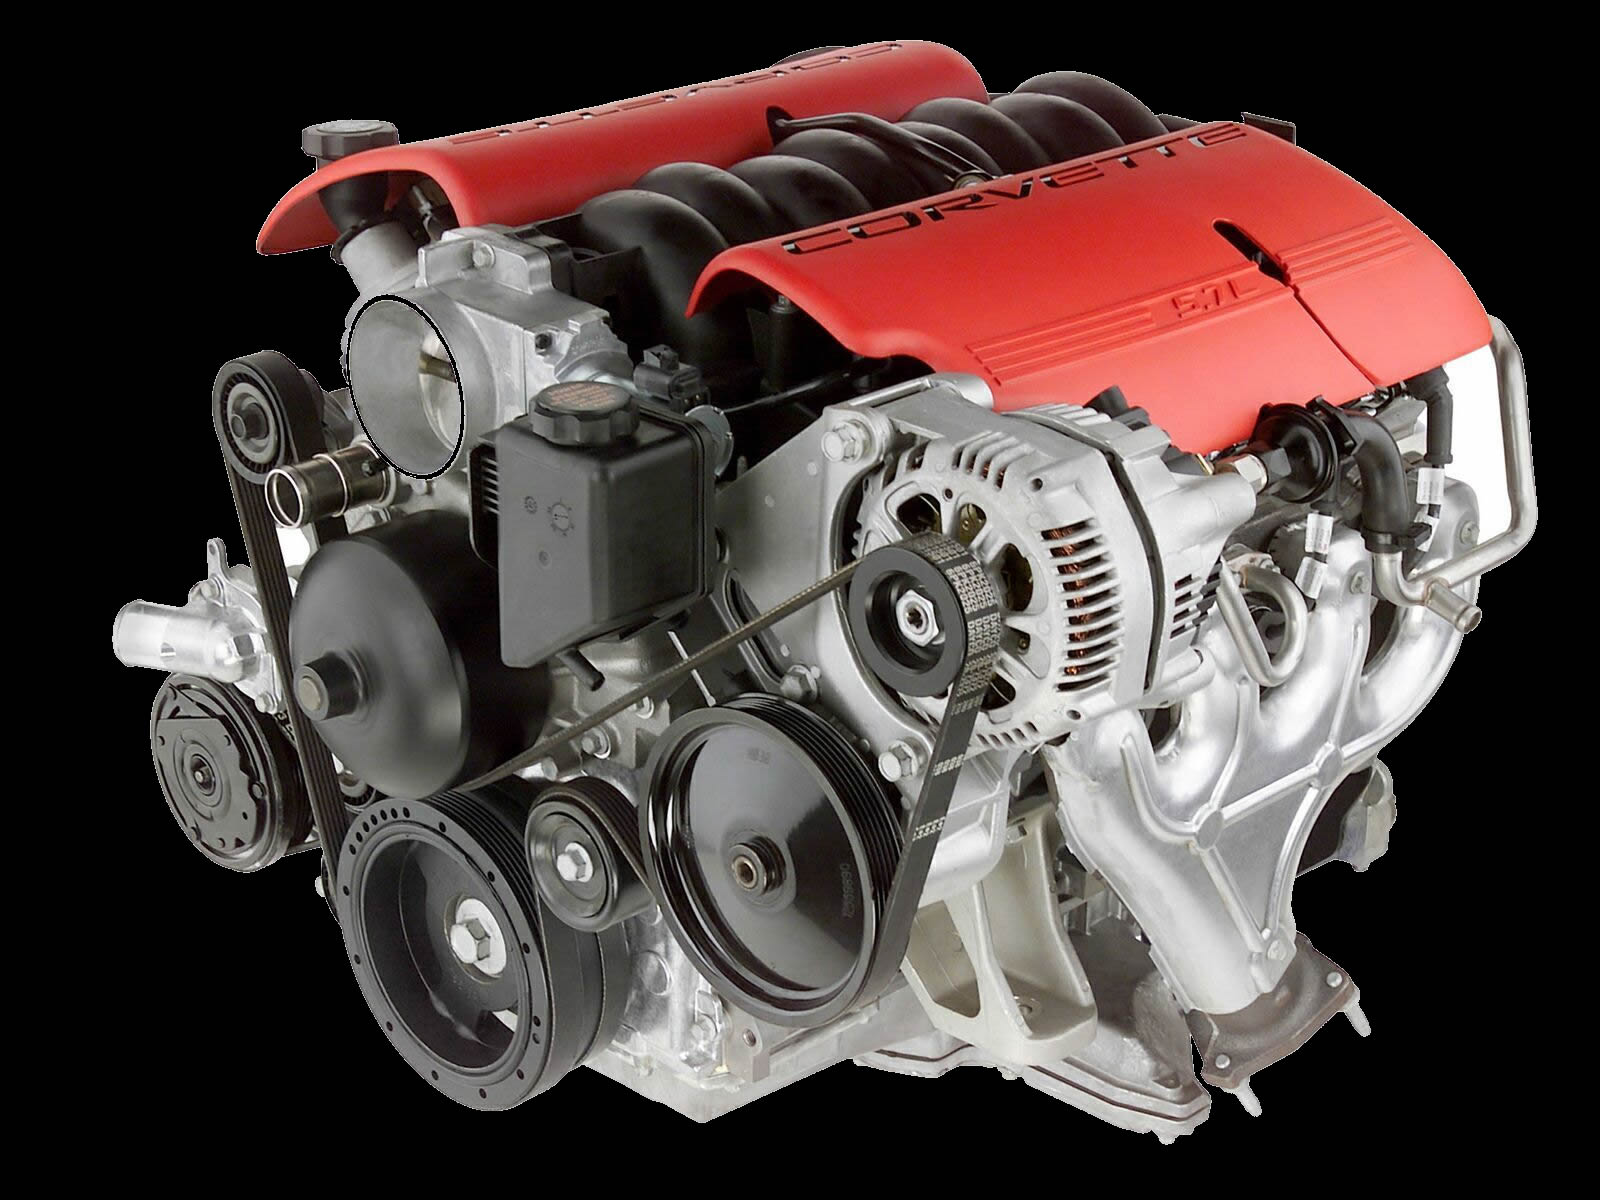 ZO6 engine